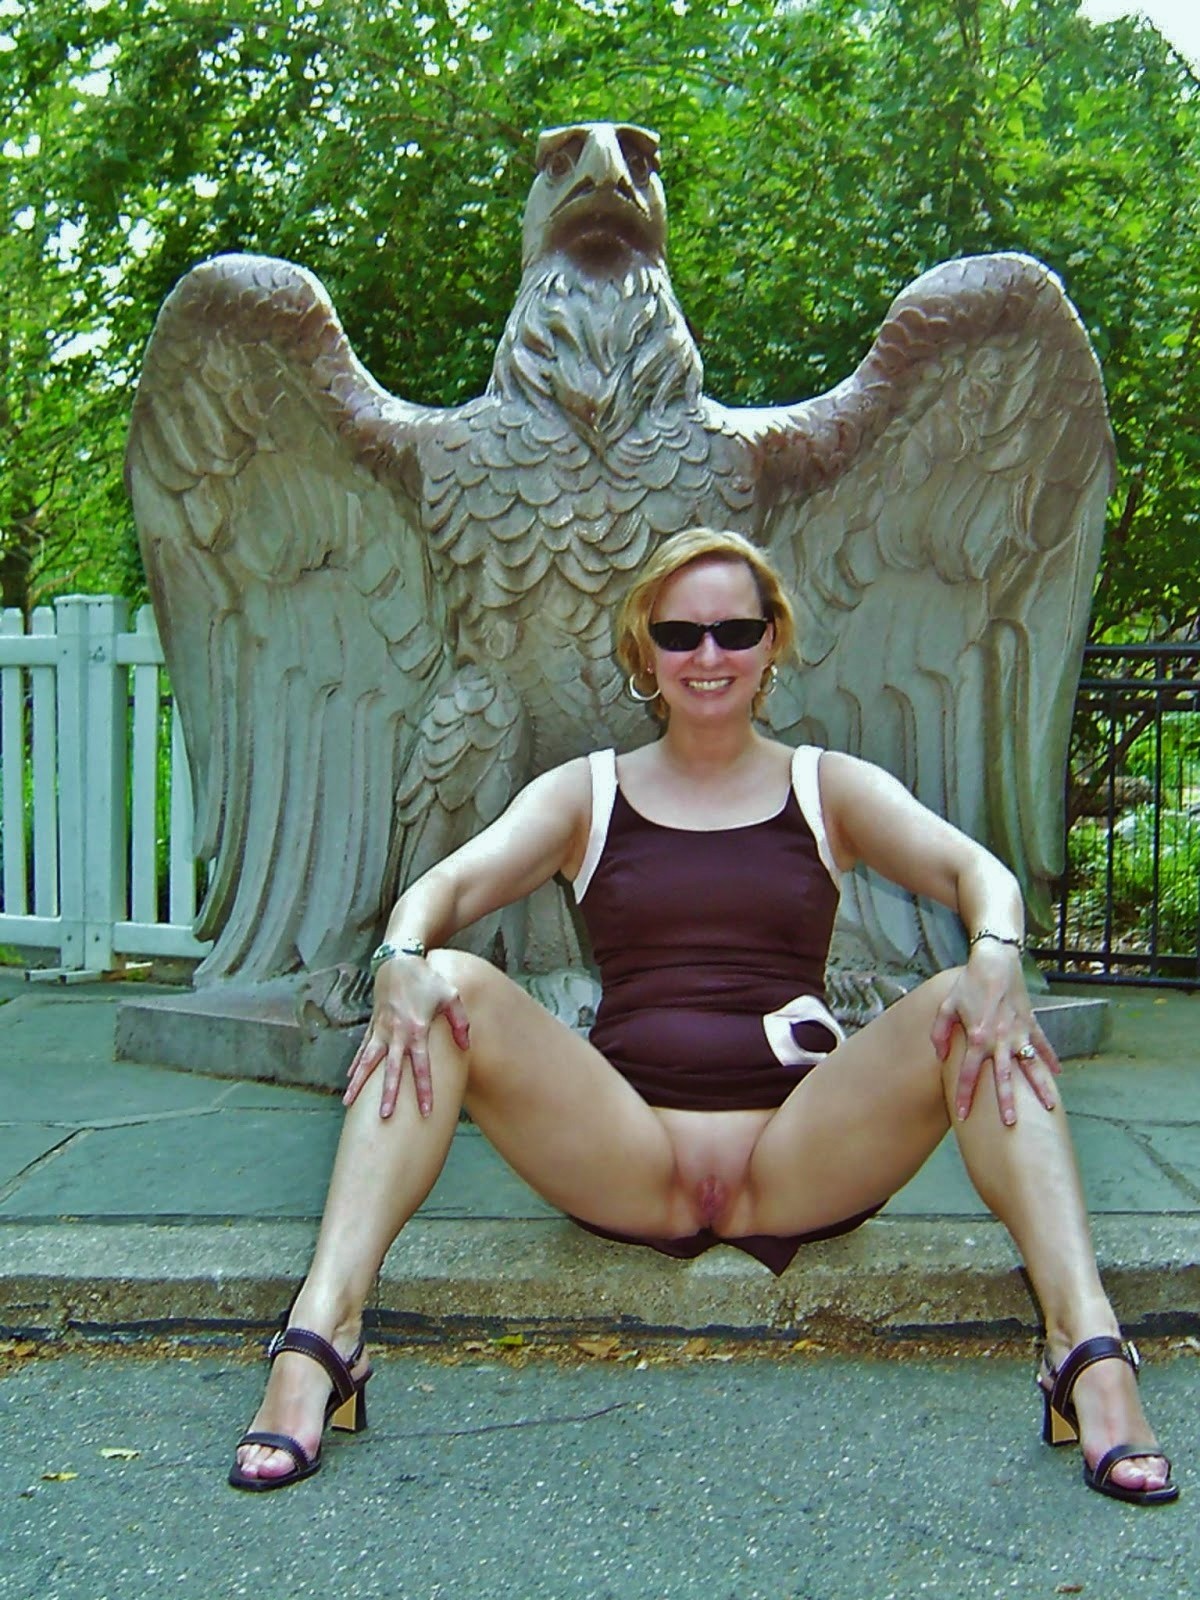 Nude girls spread eagle